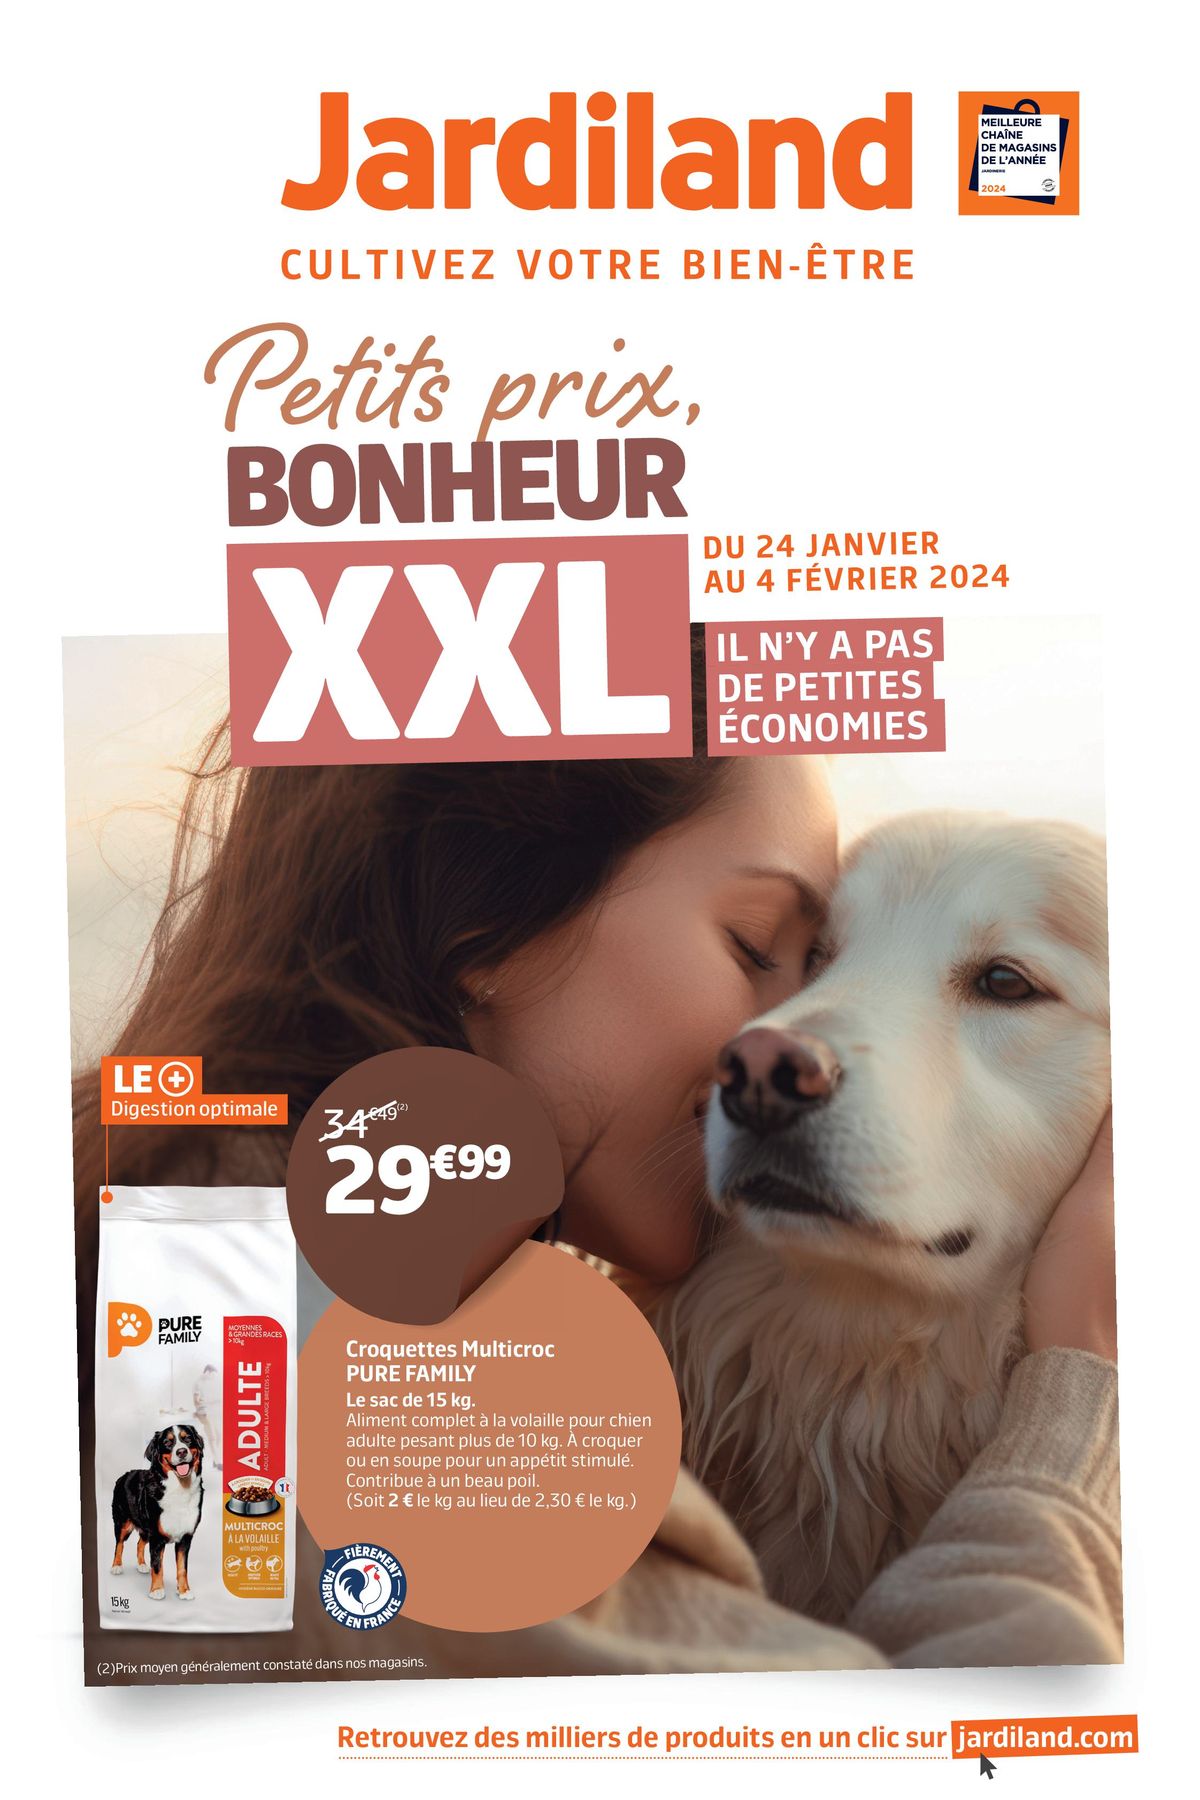 Catalogue Petits prix, bonheur XXL, page 00001